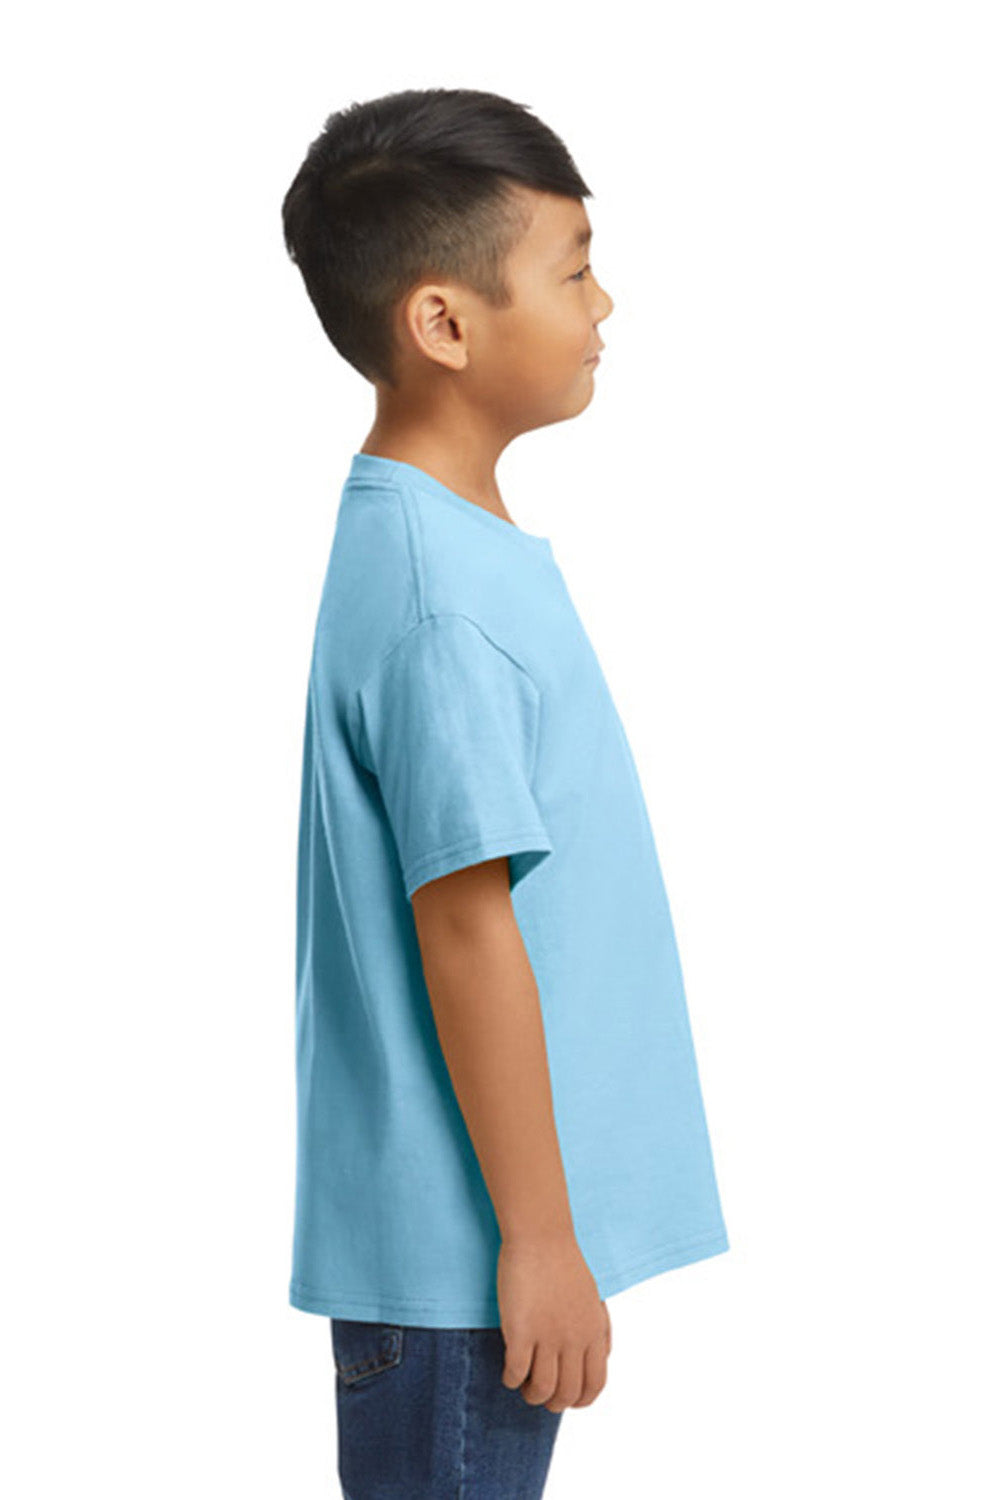 Gildan G650B Youth Softstyle Short Sleeve Crewneck T-Shirt Light Blue Side